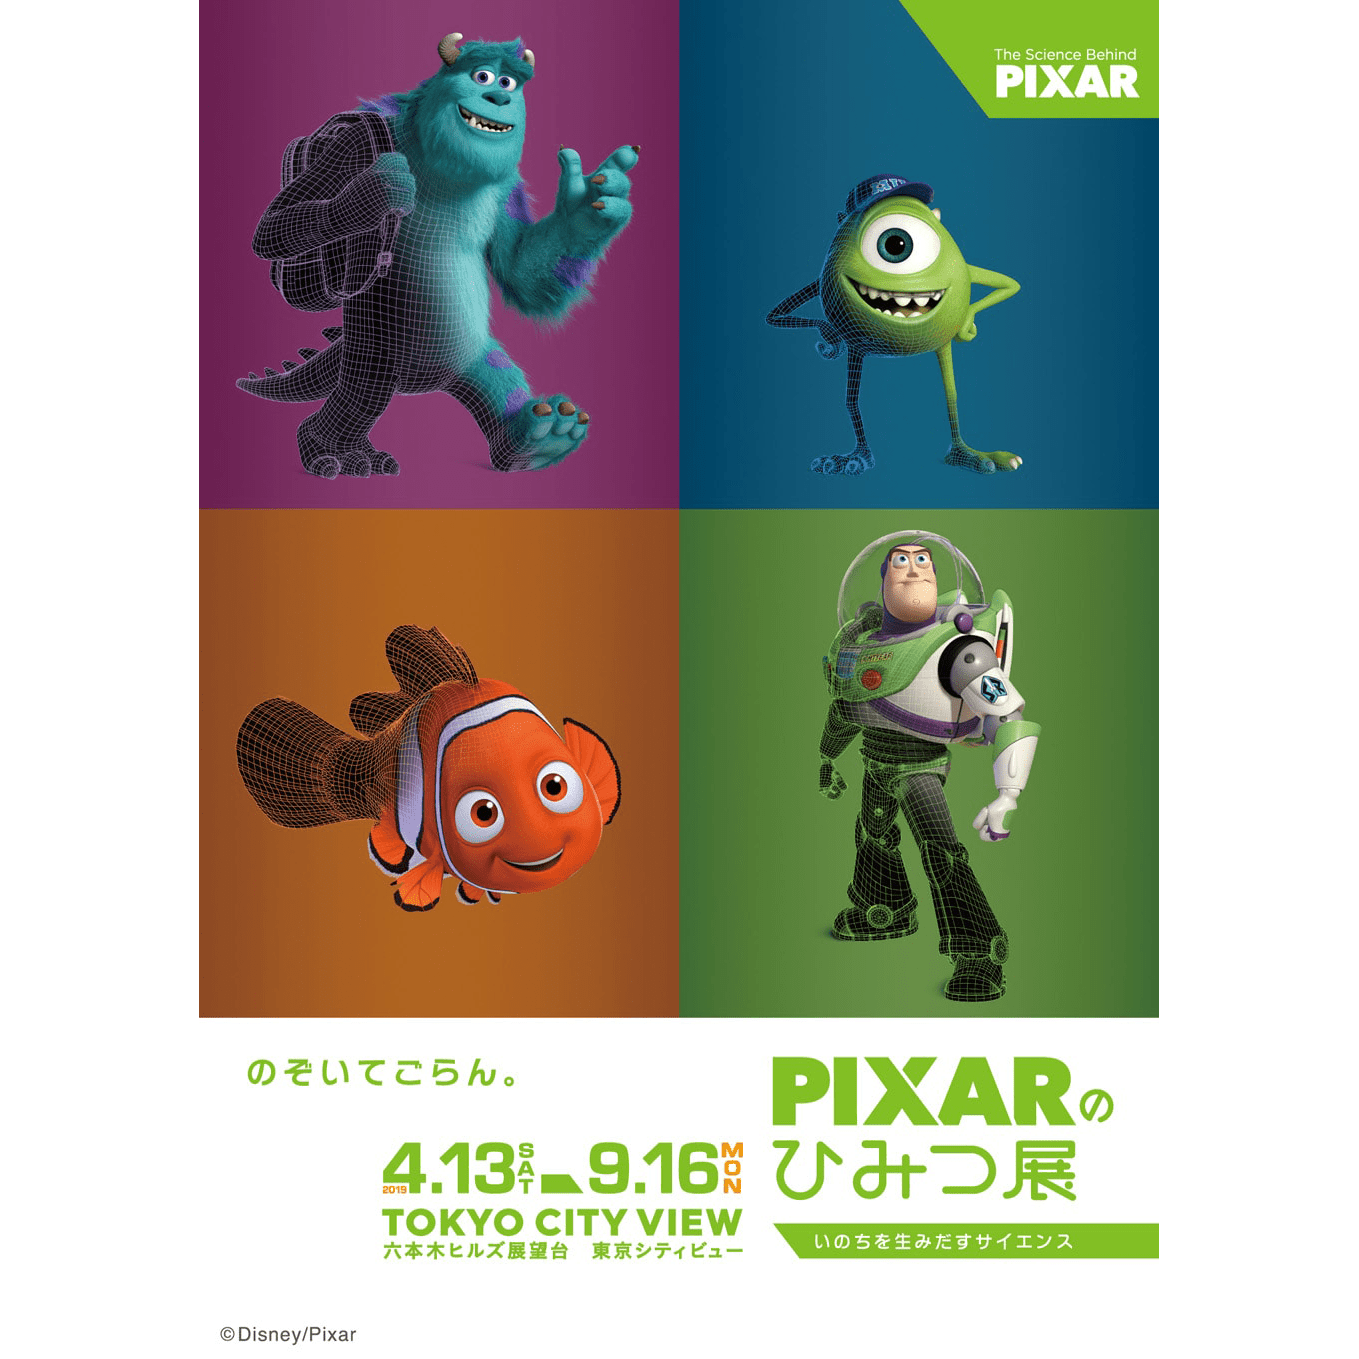 Pixarのひみつ展 いのちを生みだすサイエンス Programs 六本木アートナイト19